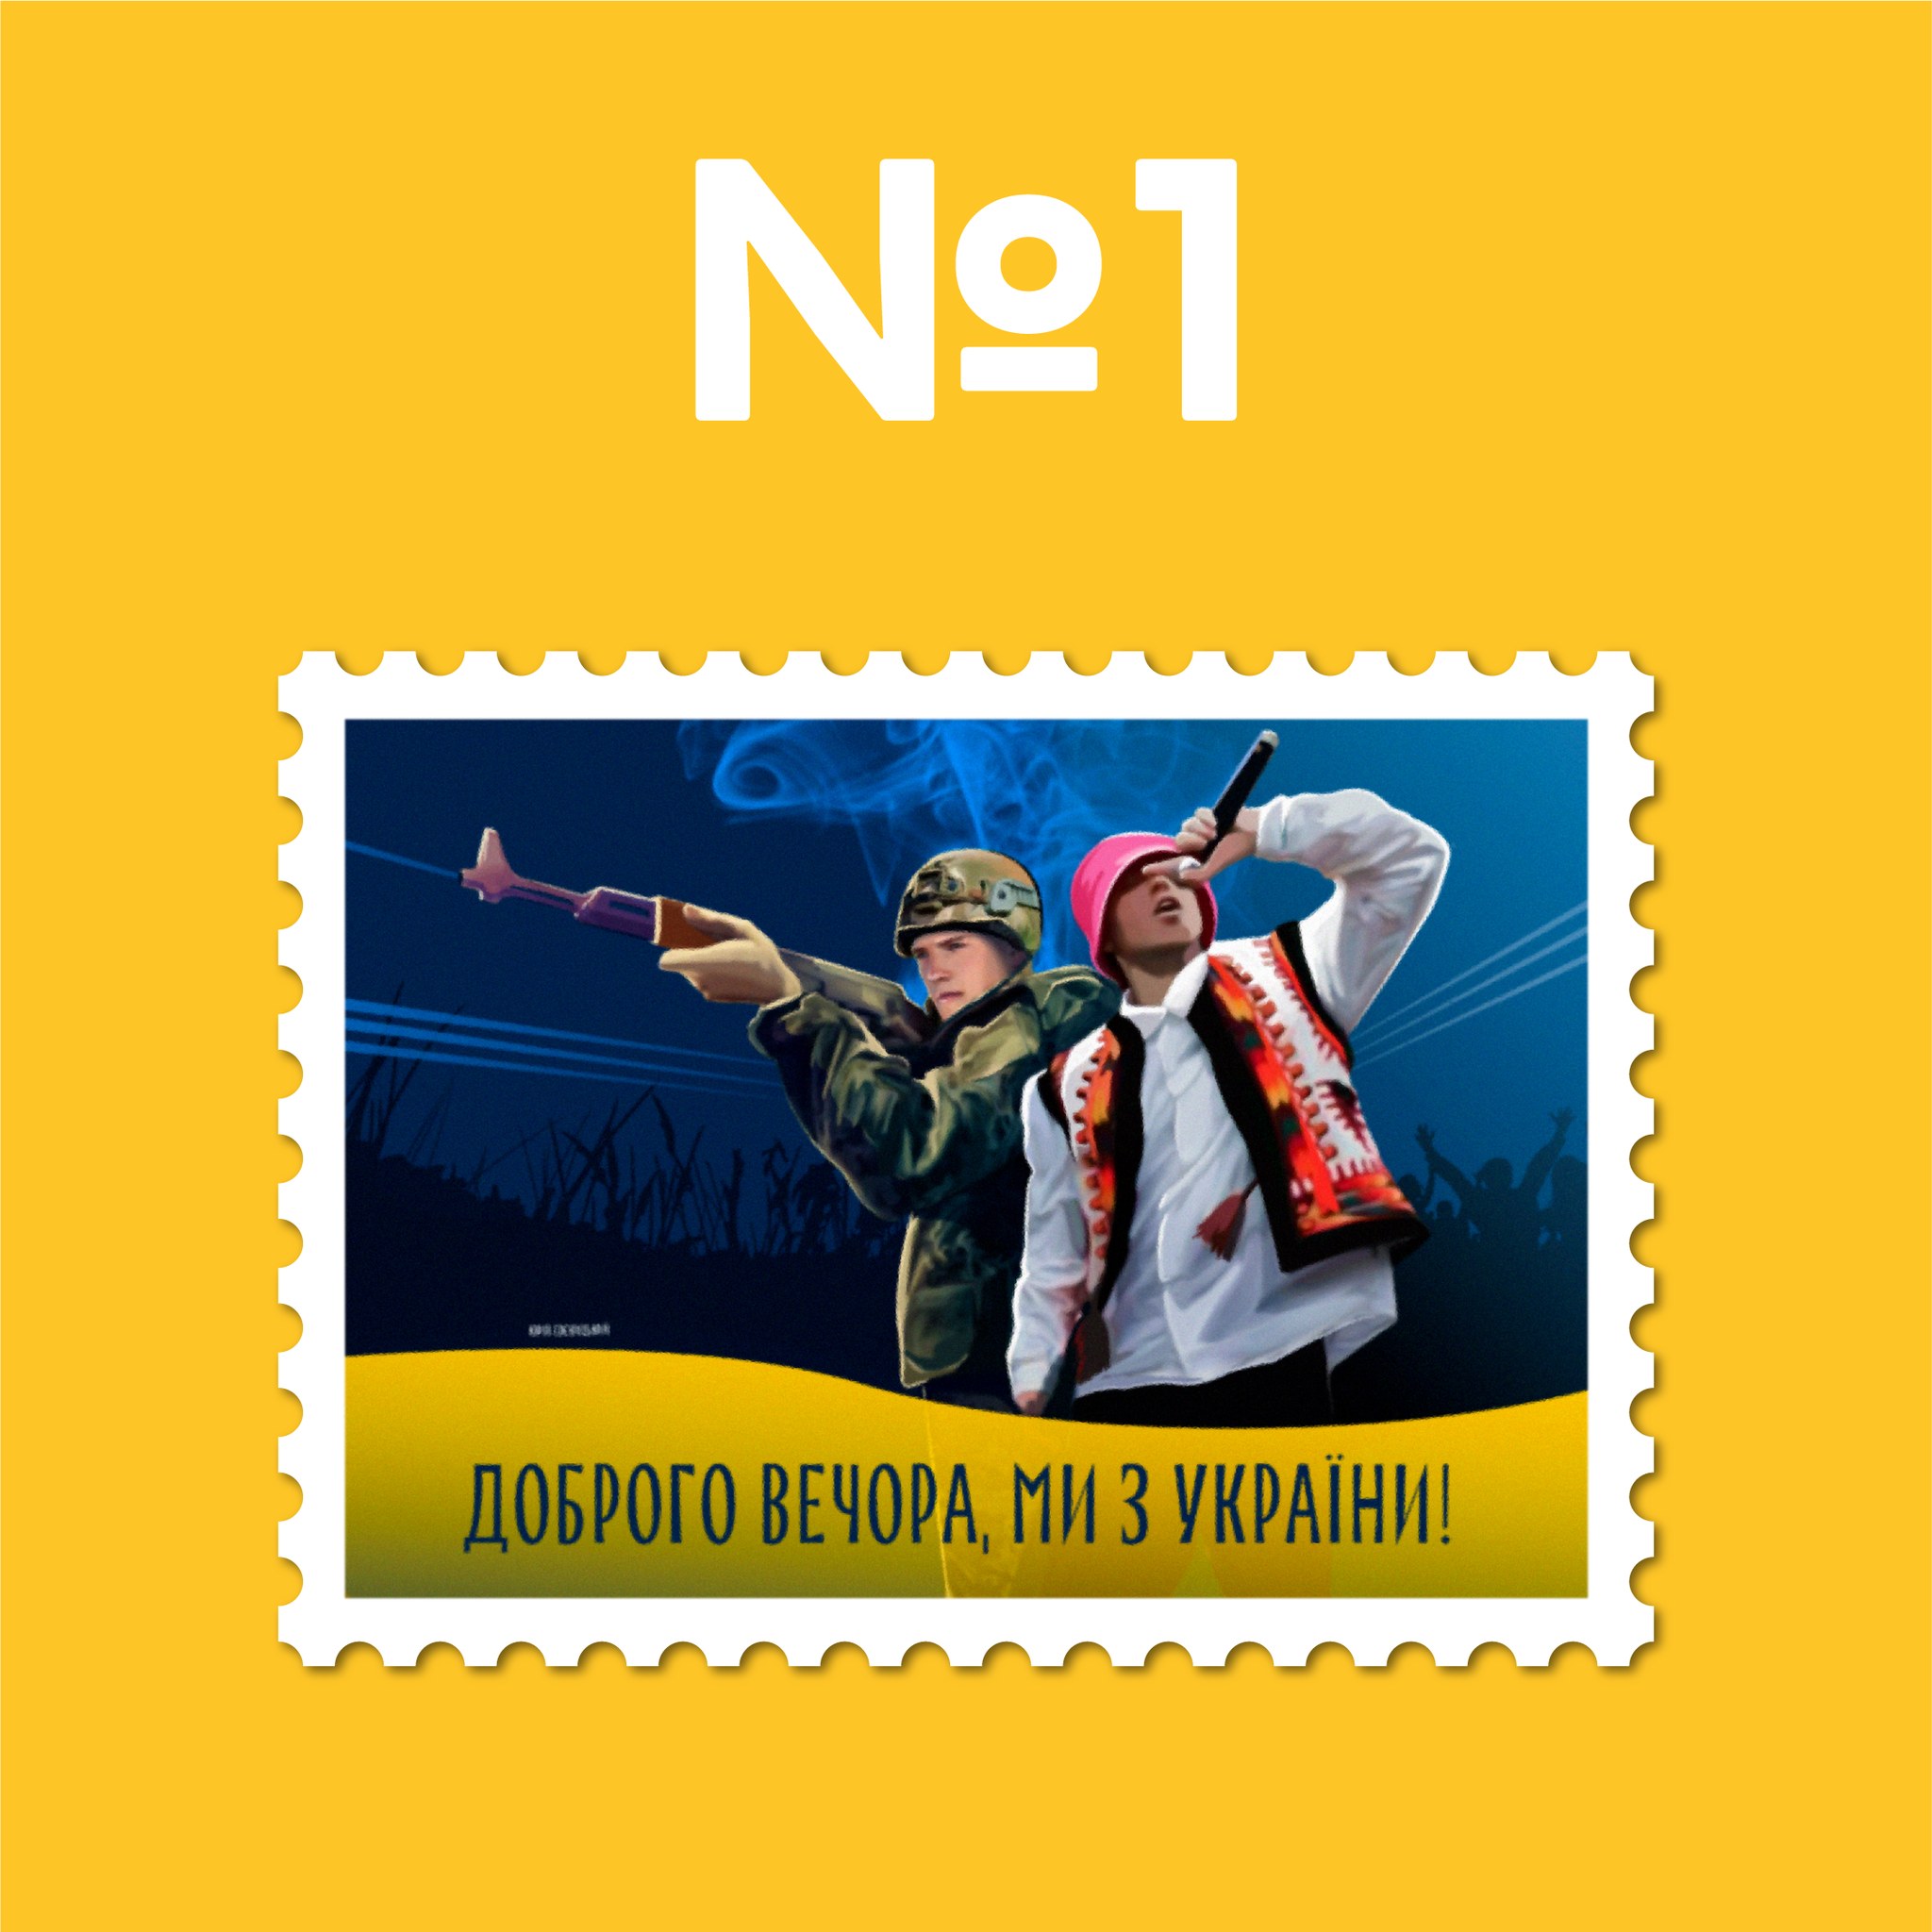 В ”Дії” началось голосование за дизайн новой марки ”Доброго вечора, ми з України!” — фото 1